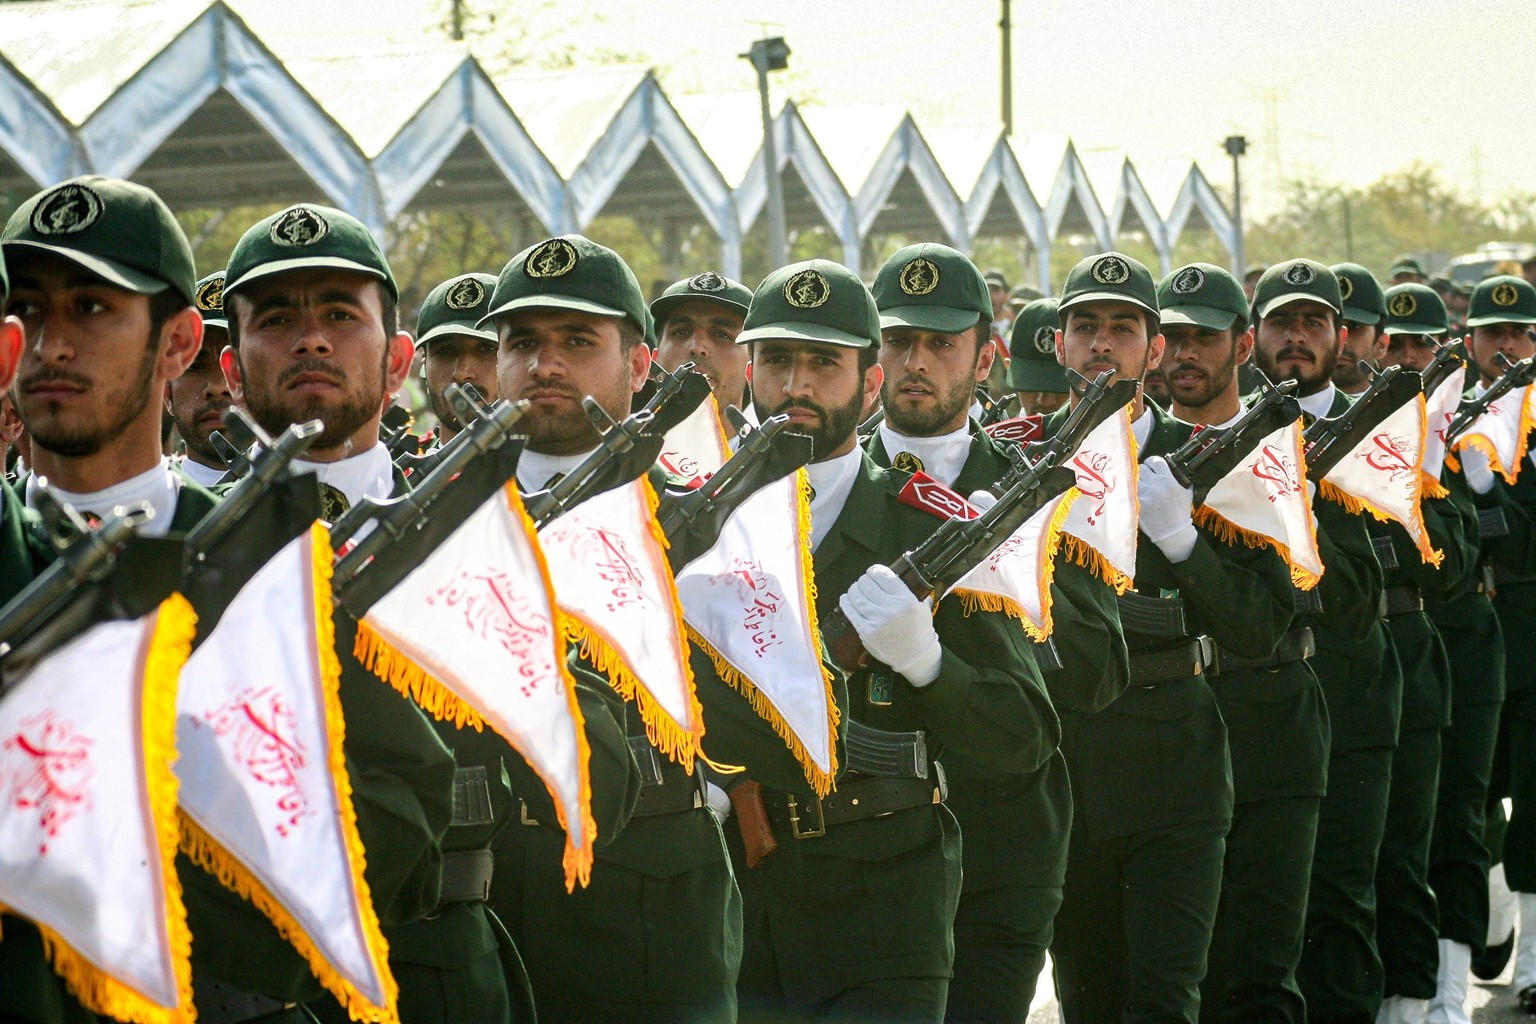 Iranian Military Parade Irans elite Revolutionary Guards march during a military parade in Tehran on Thursday, July 23, 2009. Tehran Tehran Iran Copyright: xHosseinxBerisx